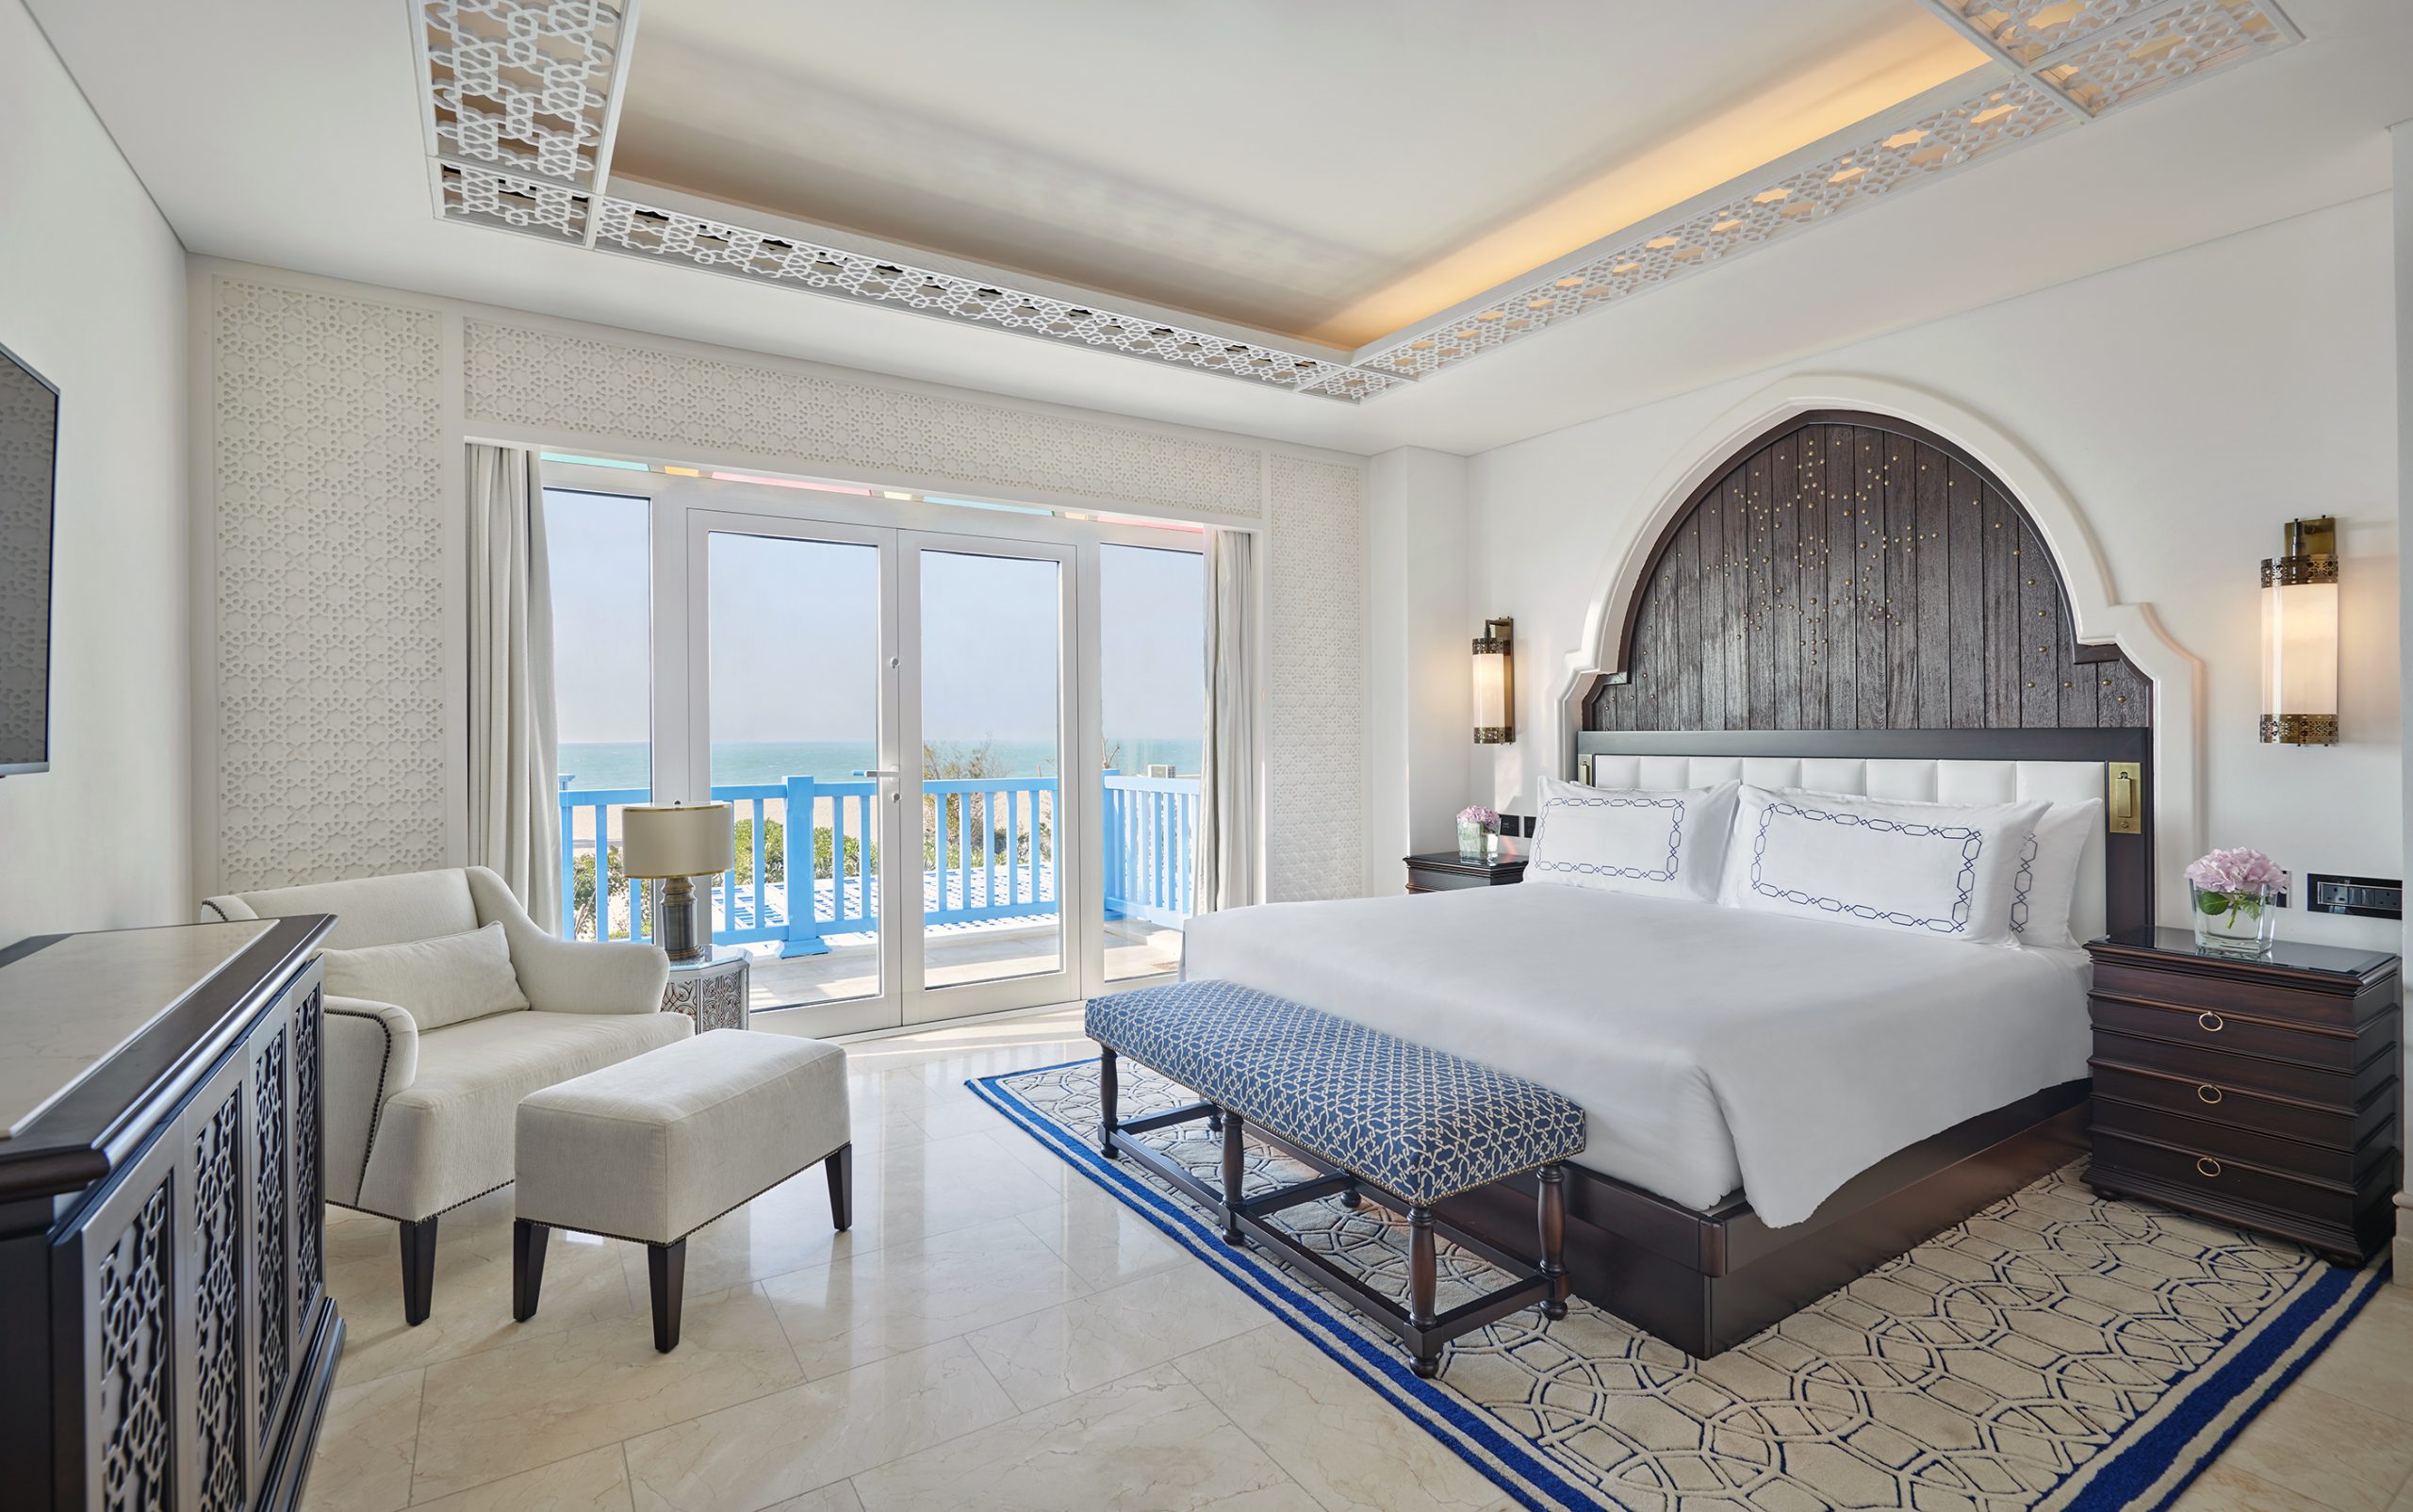 Hilton Salwa Beach Resort & Villas Launches Irresistible Summer Offer